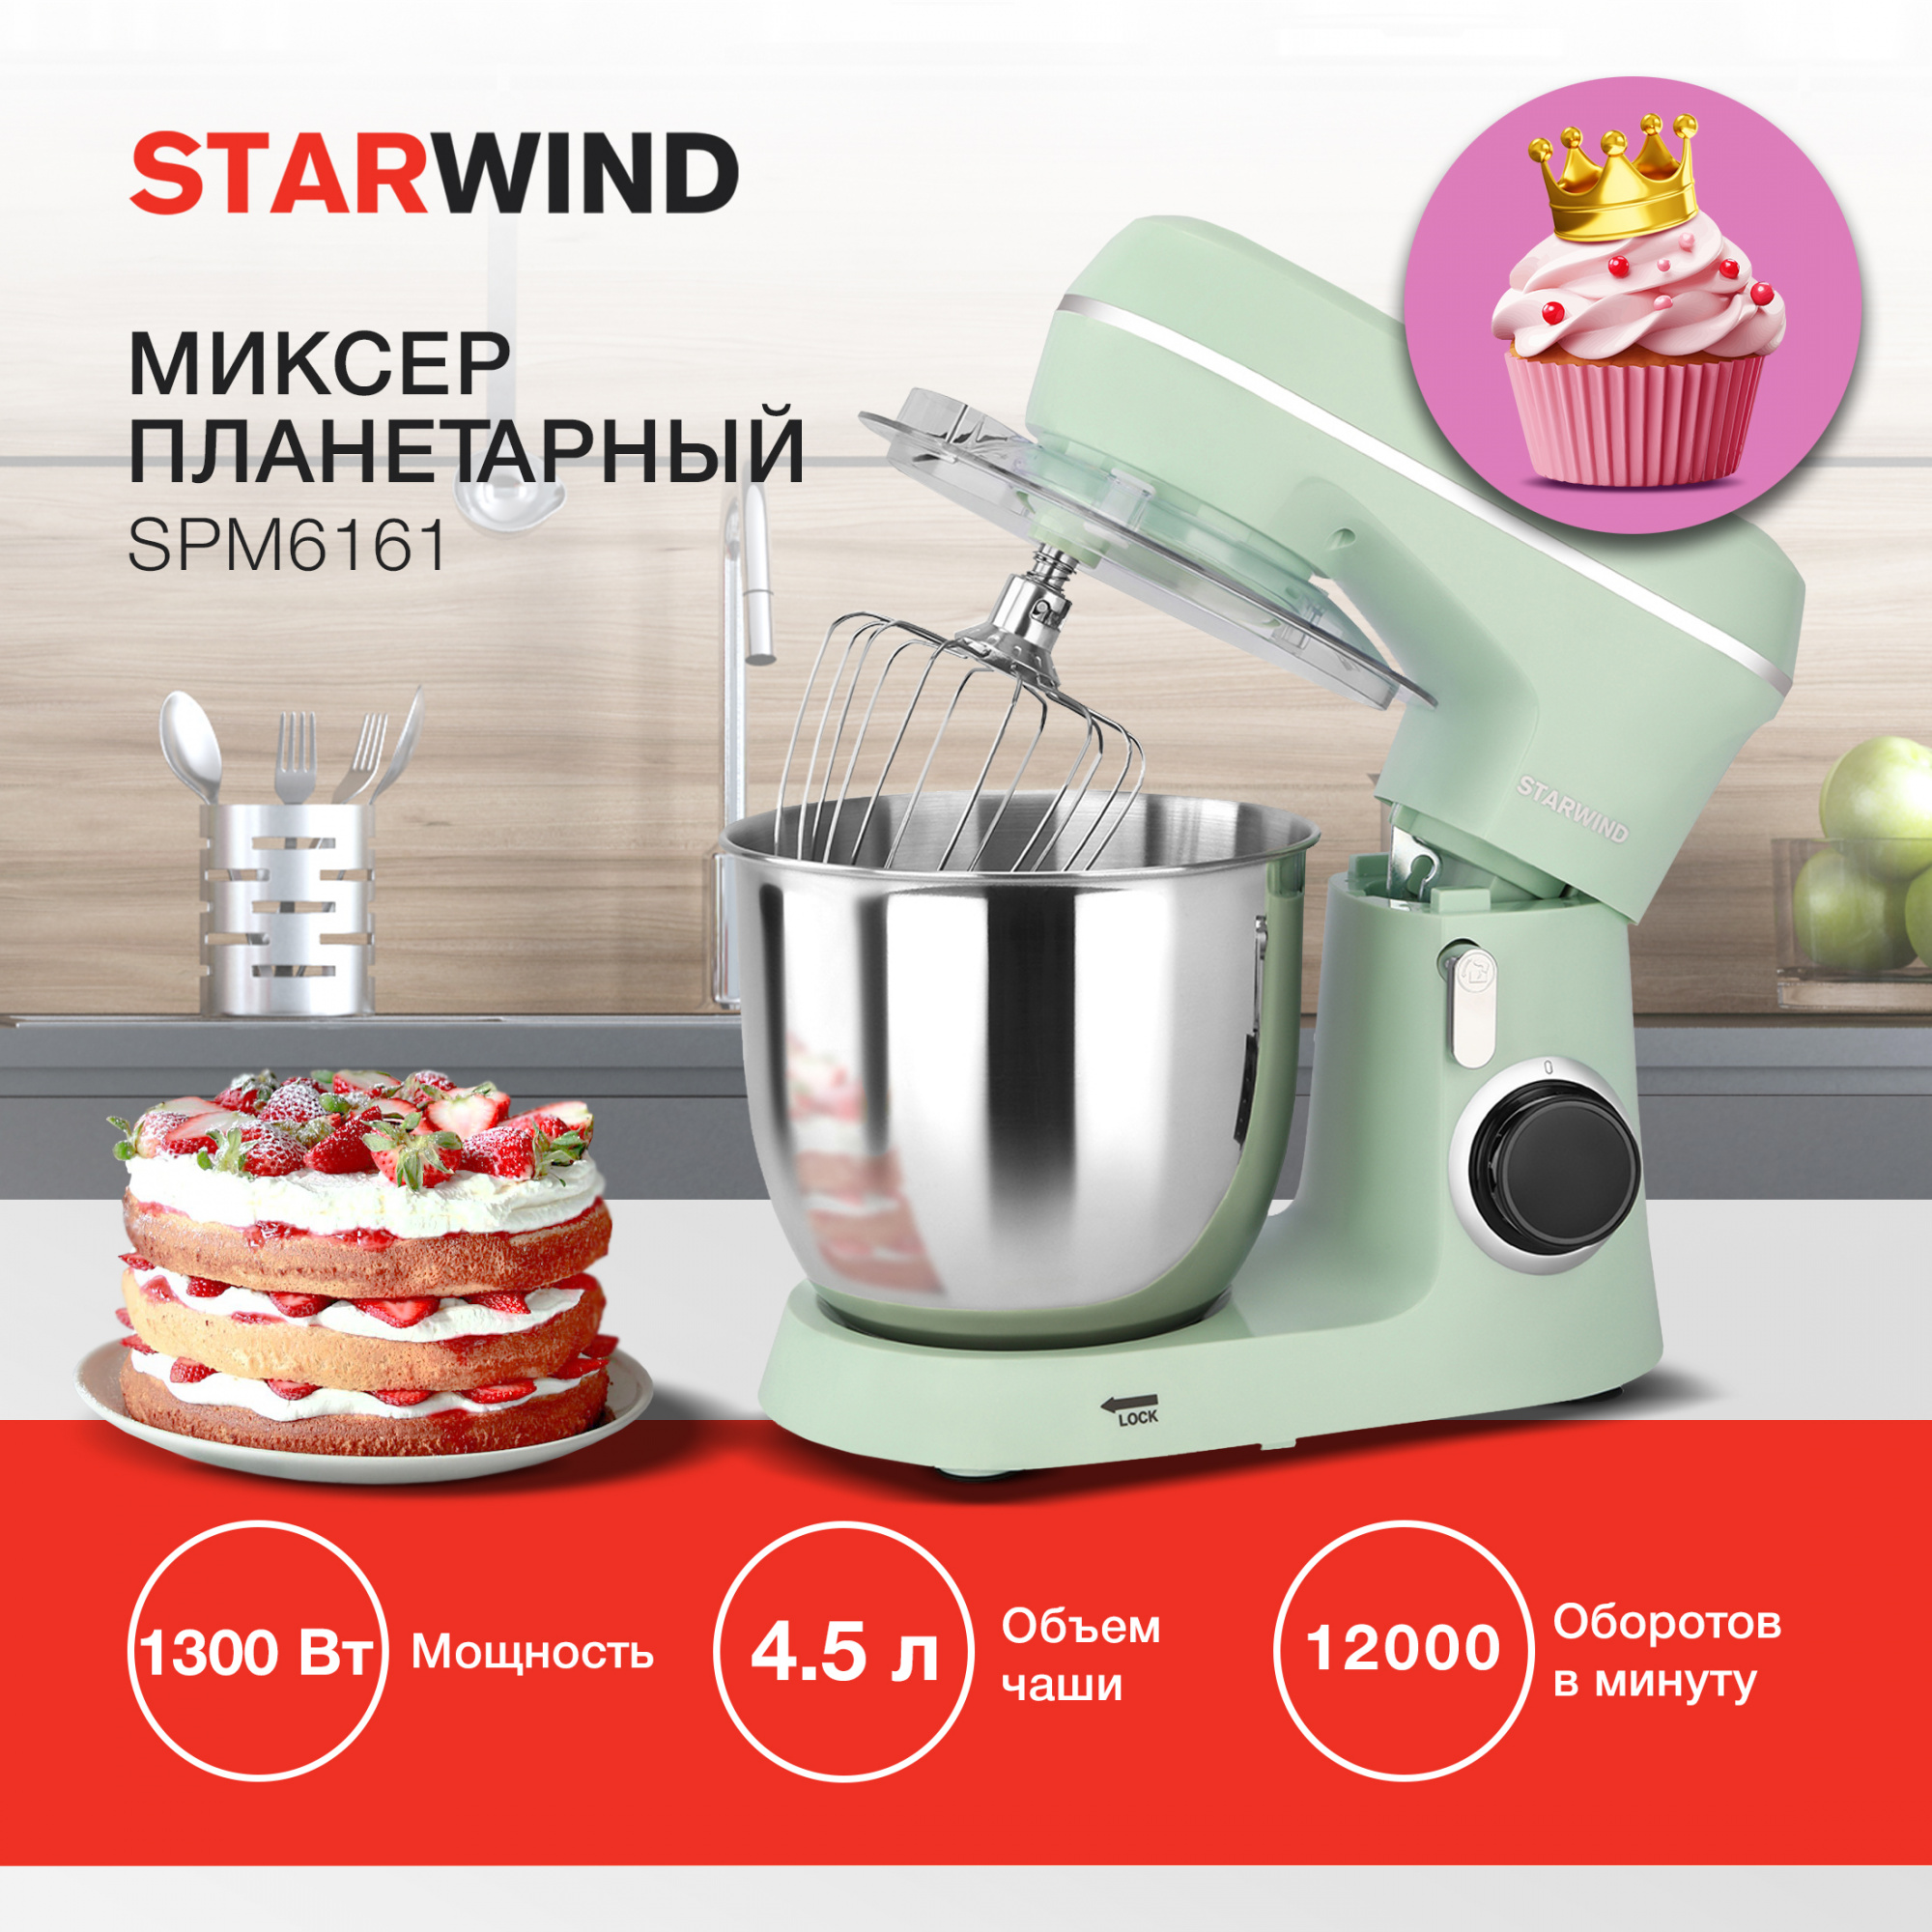 Миксер планетарный Starwind SPM6161 мятный от магазина Старвинд